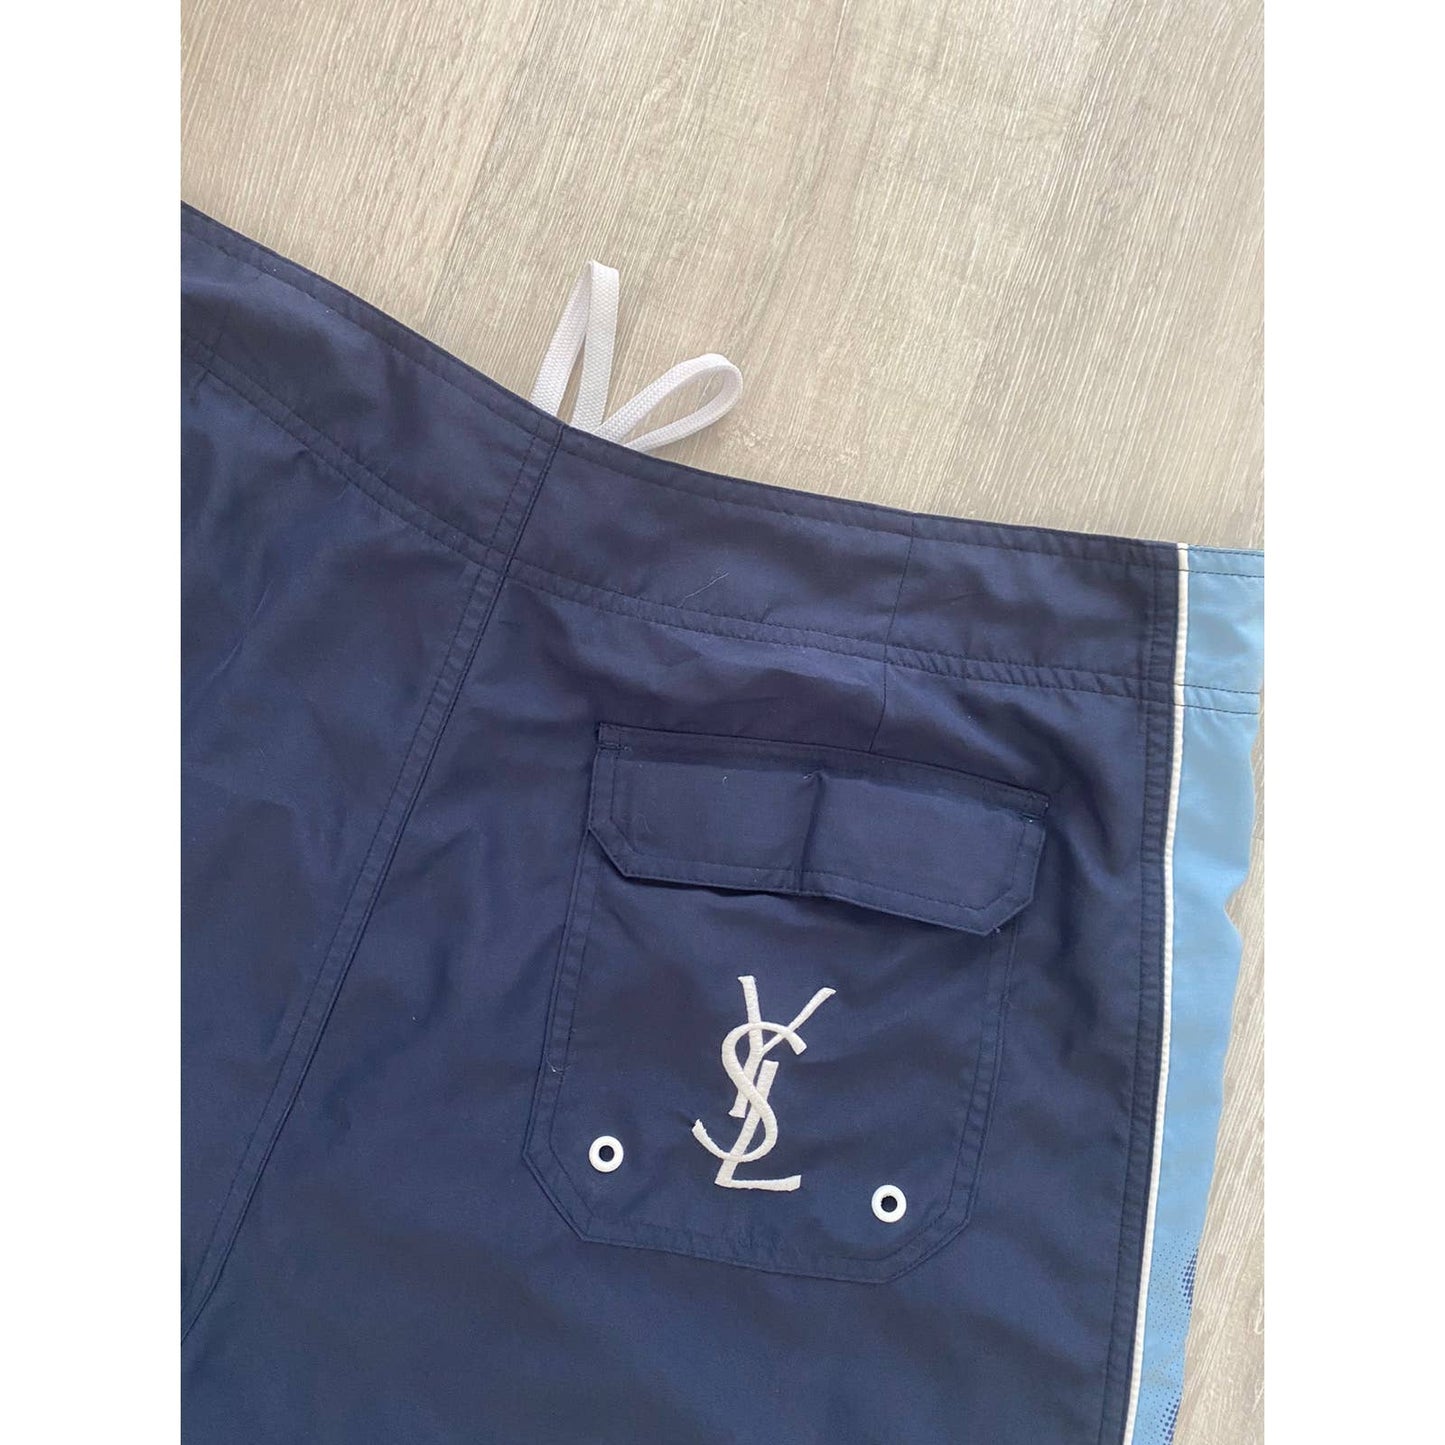 90s Yves Saint Laurent vintage YSL navy shorts big logo